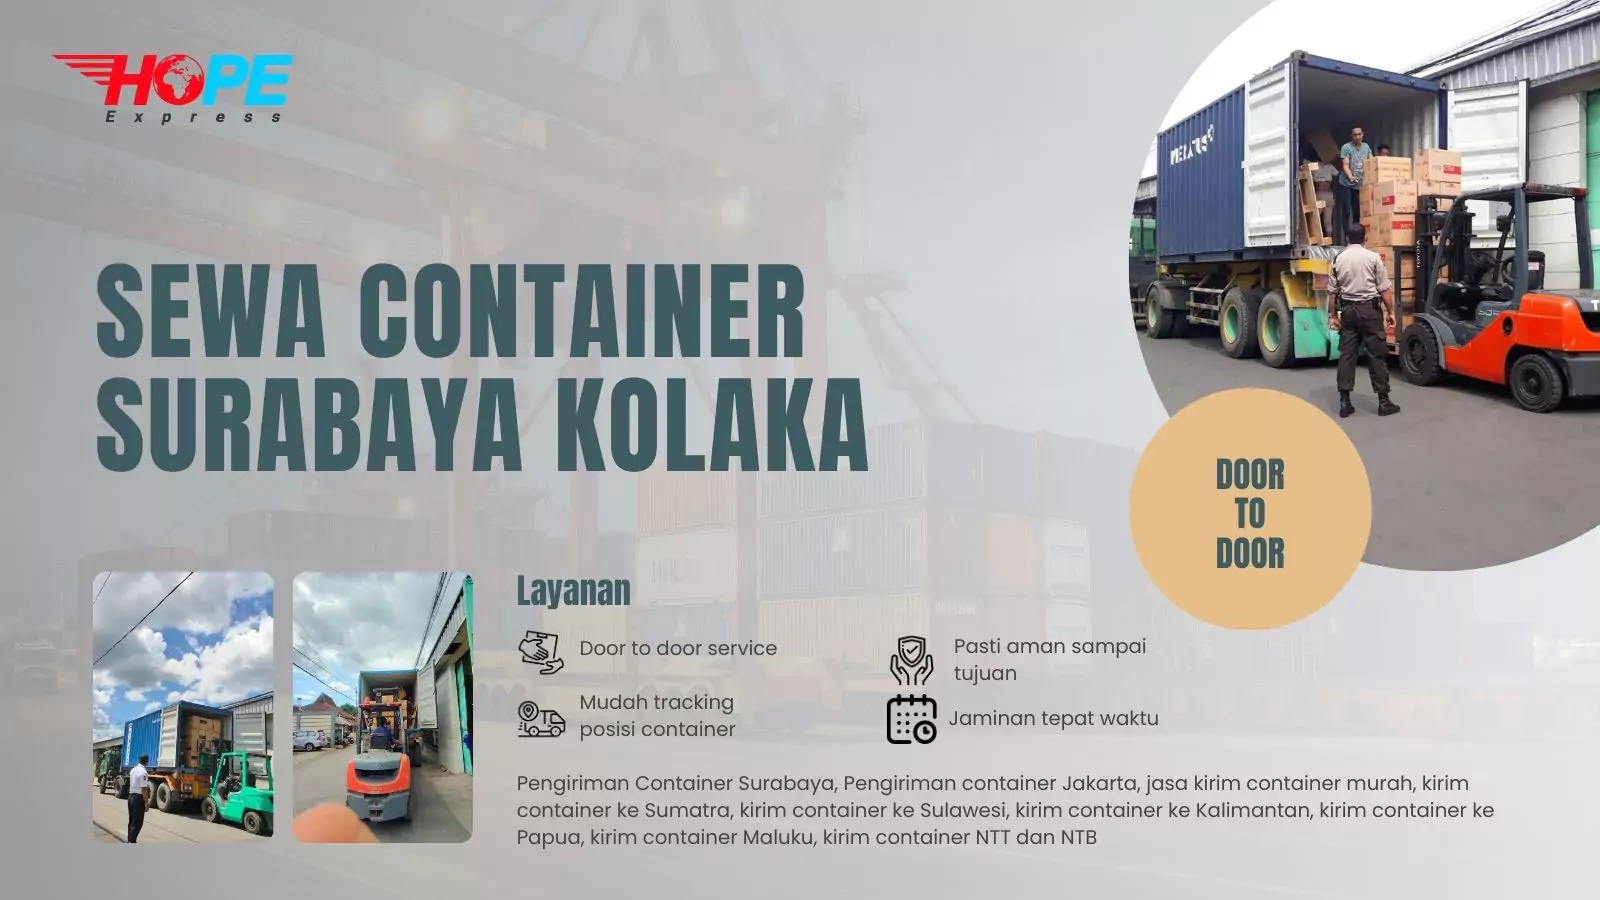 Sewa Container Surabaya Kolaka